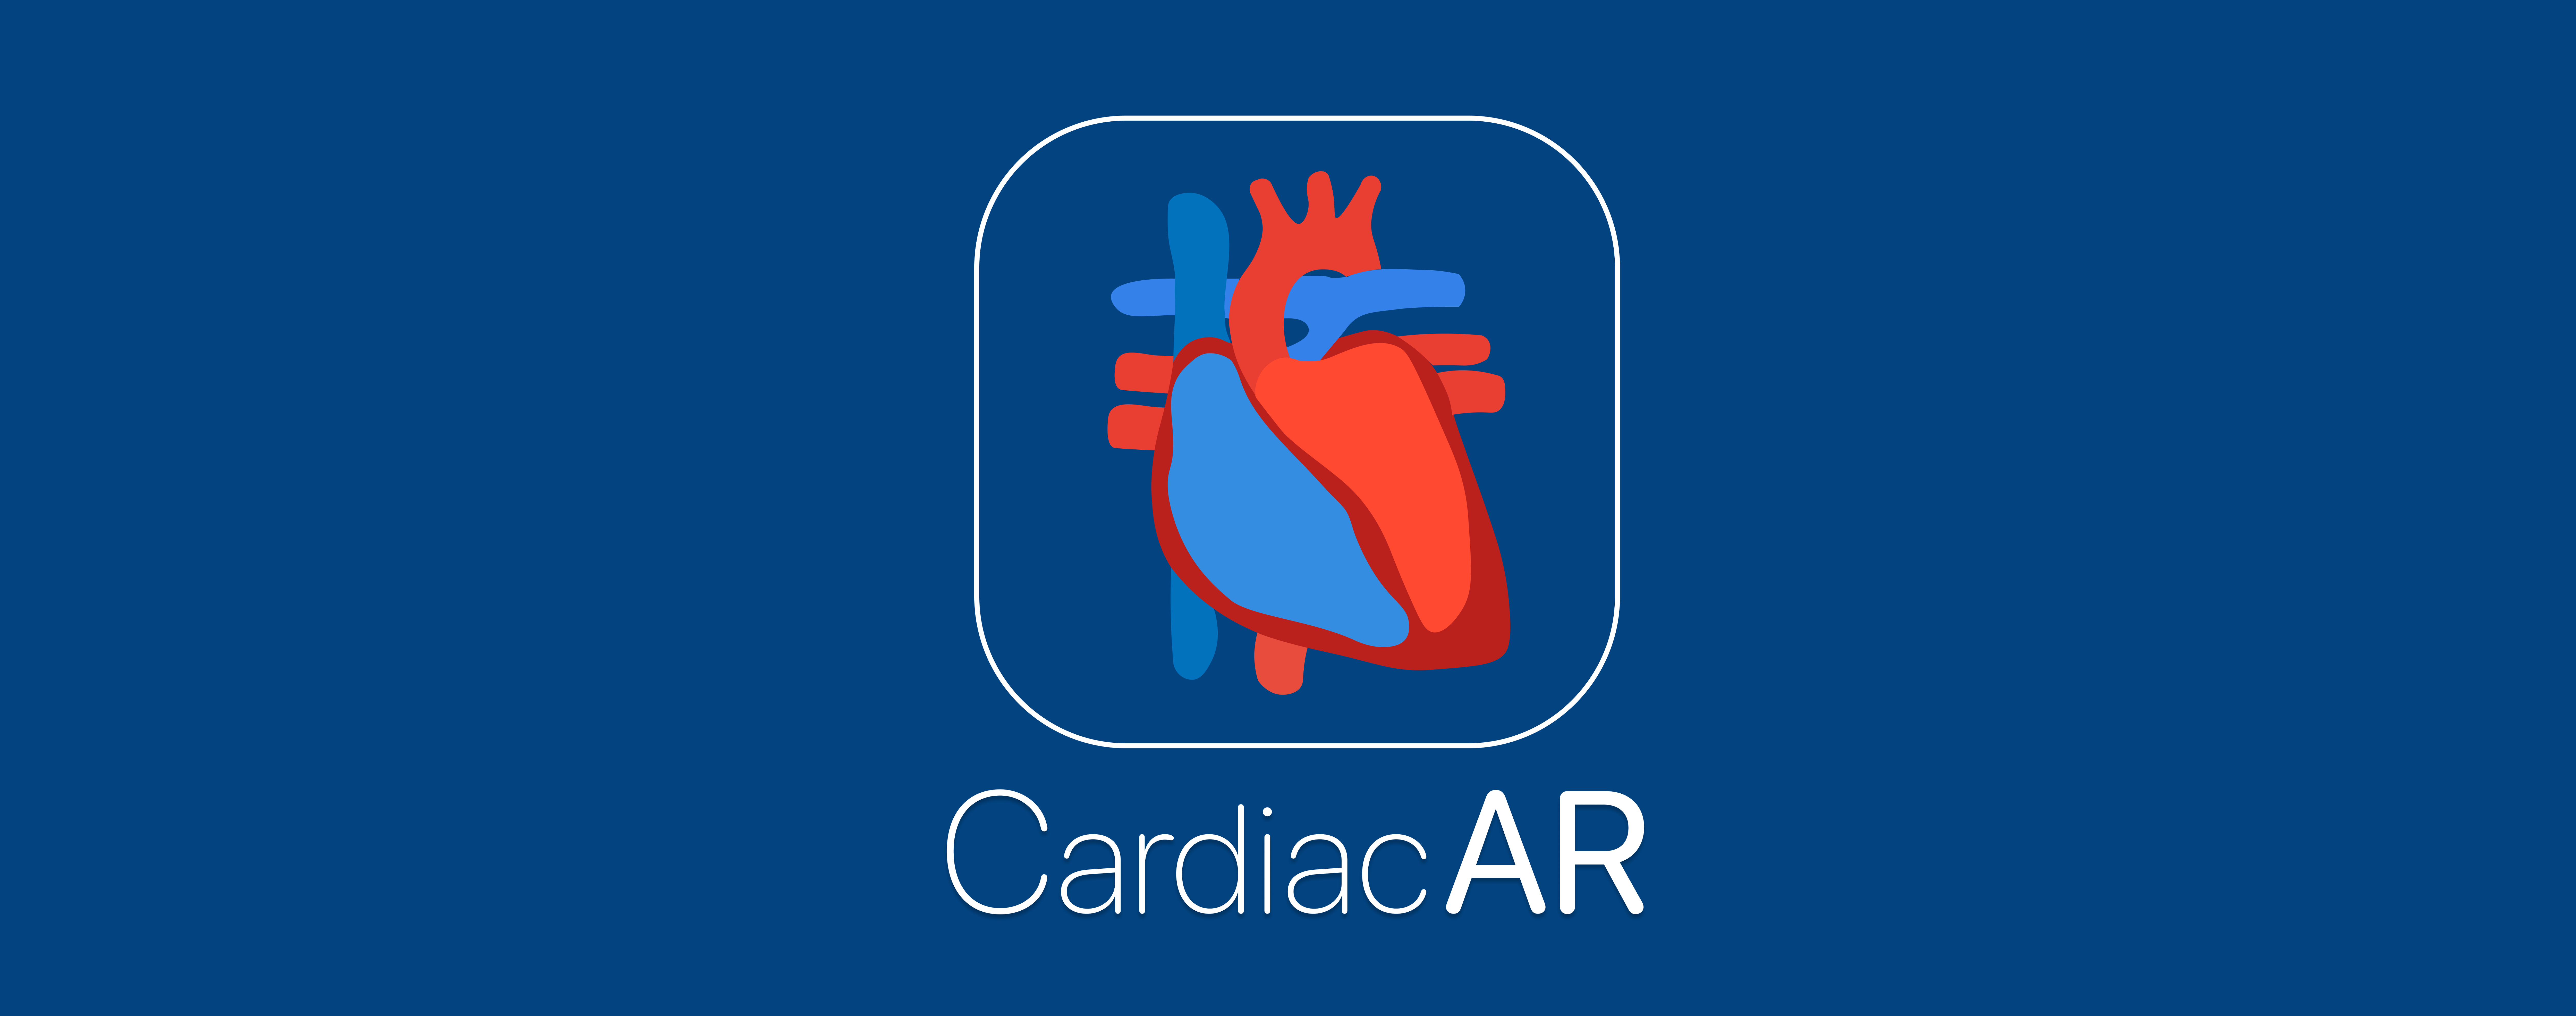 CardiacAR Banner